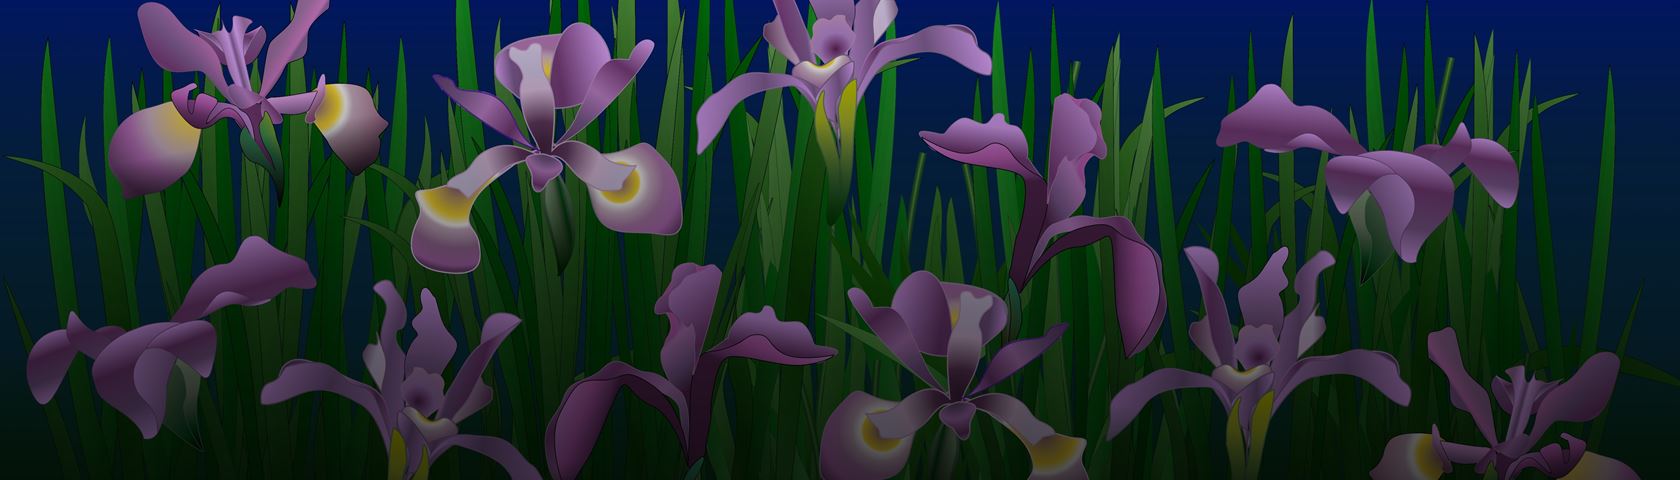 Irises Desktop